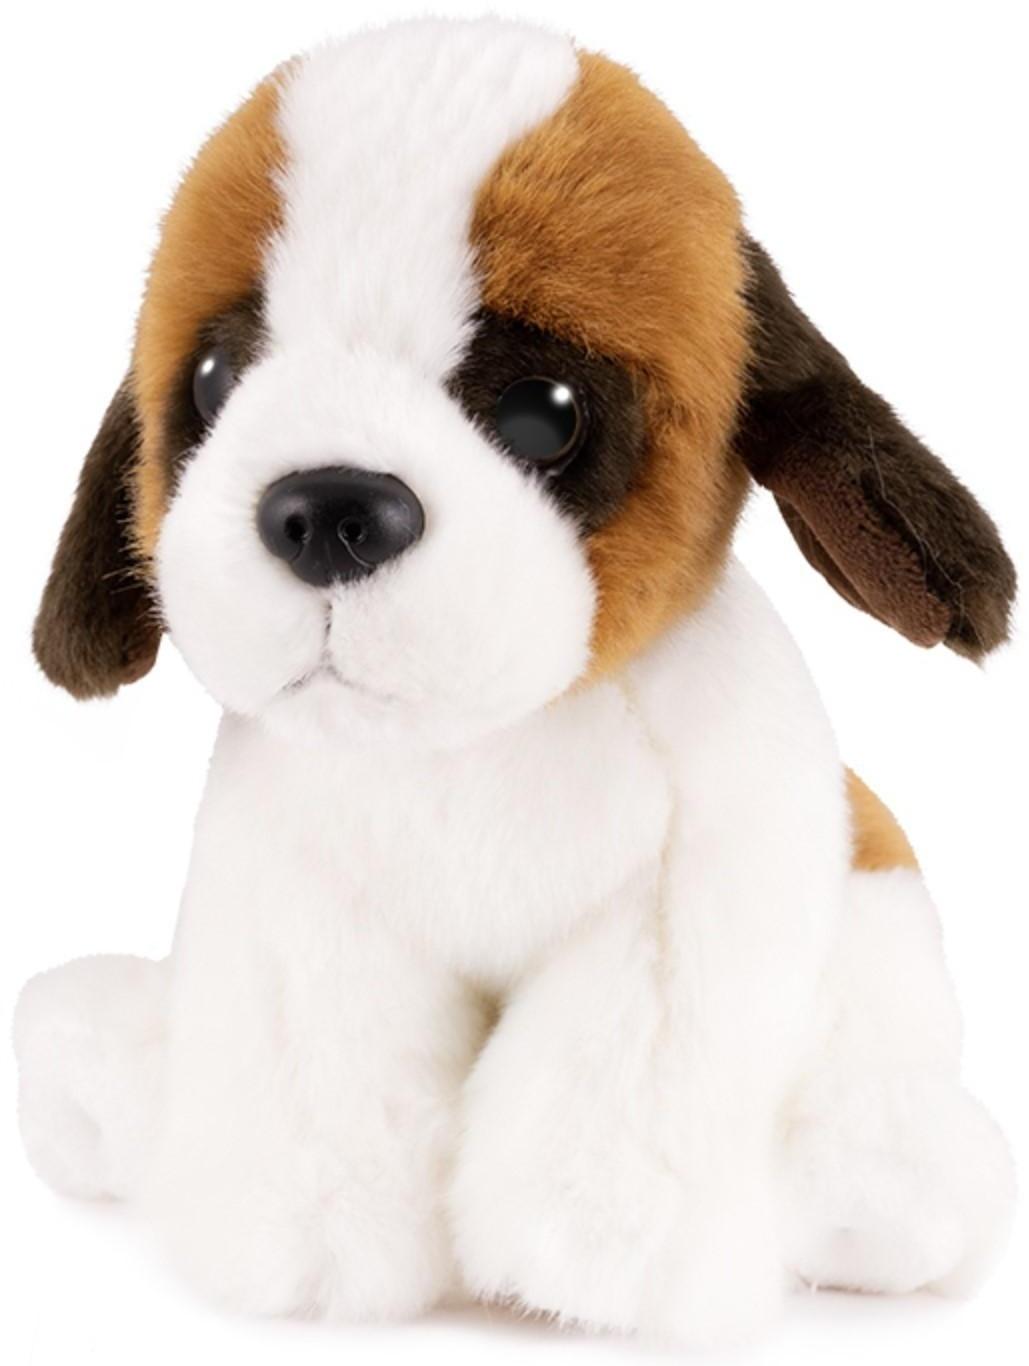 Мягкая игрушка «Собака сенбернар», 20 см